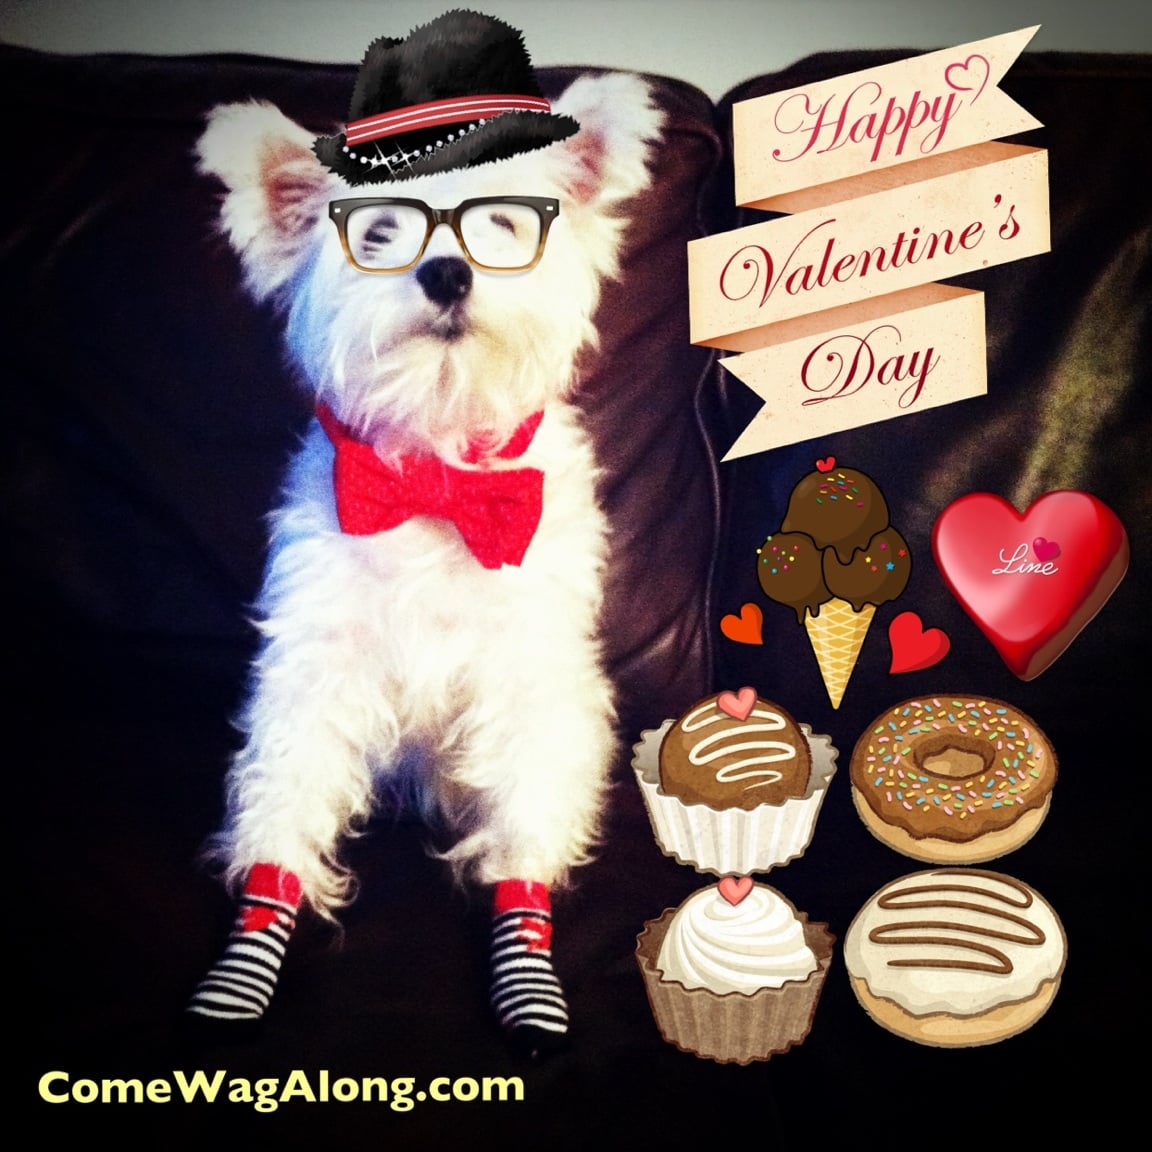 Valentine's Day Dog Treats